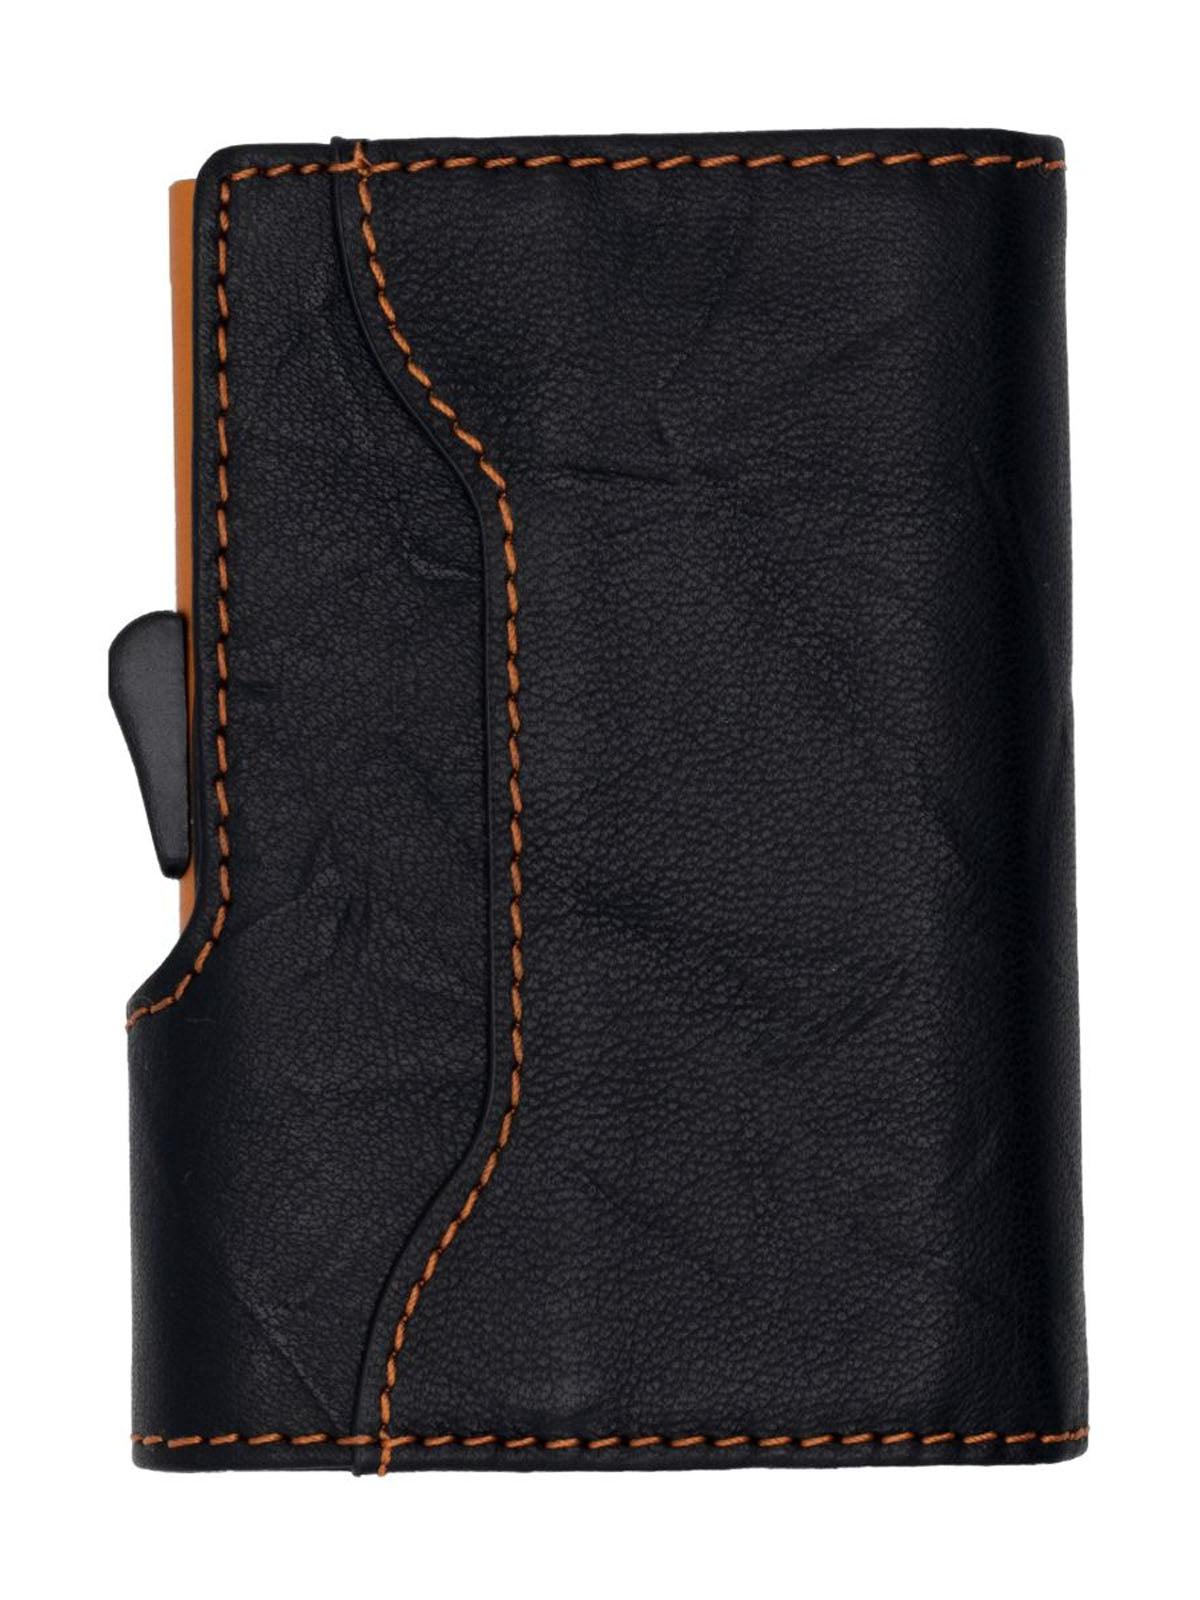 C-Secure Italian Leather Single Wallet Special Edition RFID Black Orange